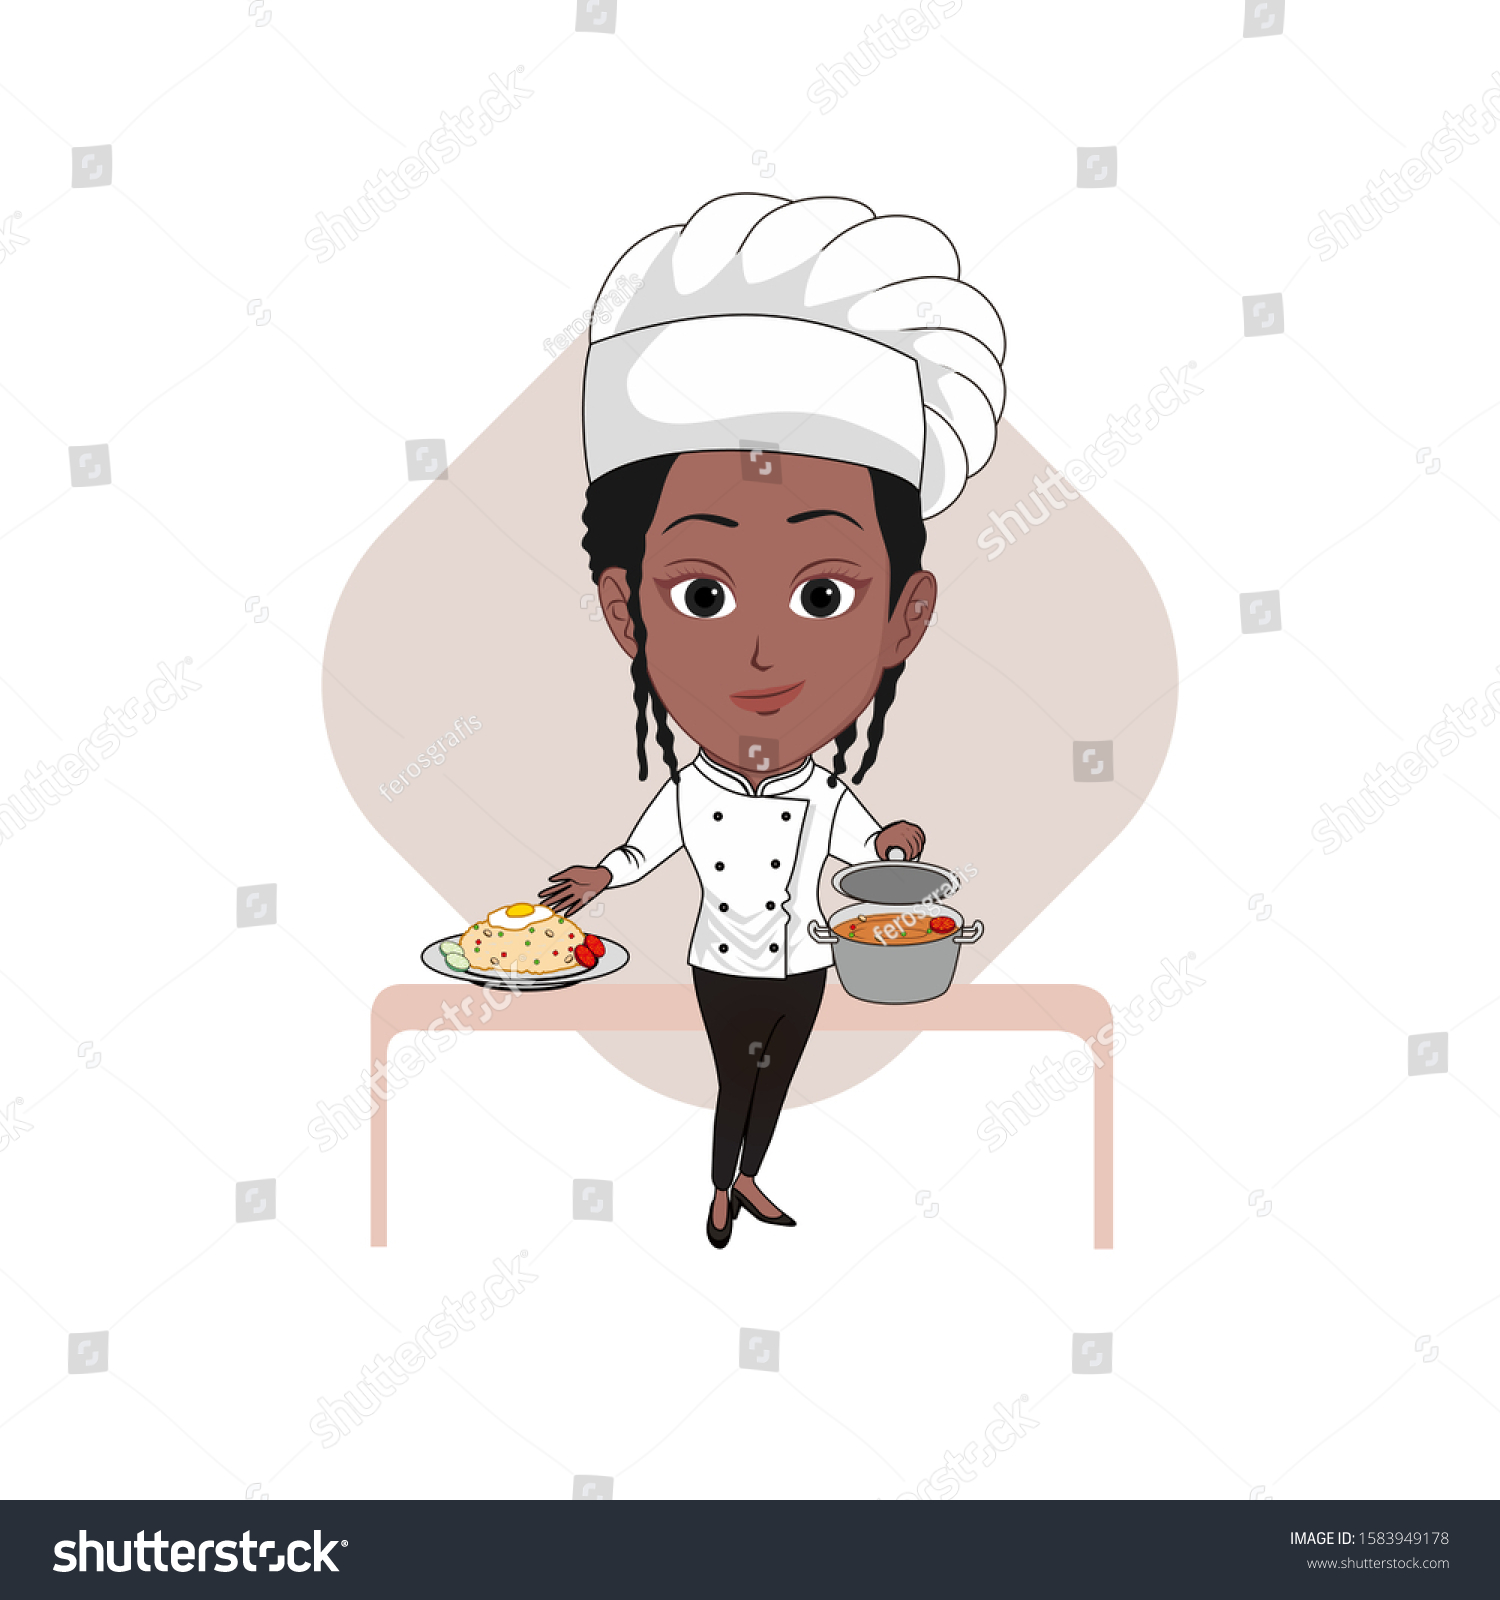 888 Black Female Chef Cartoon Images Stock Photos Vectors Shutterstock